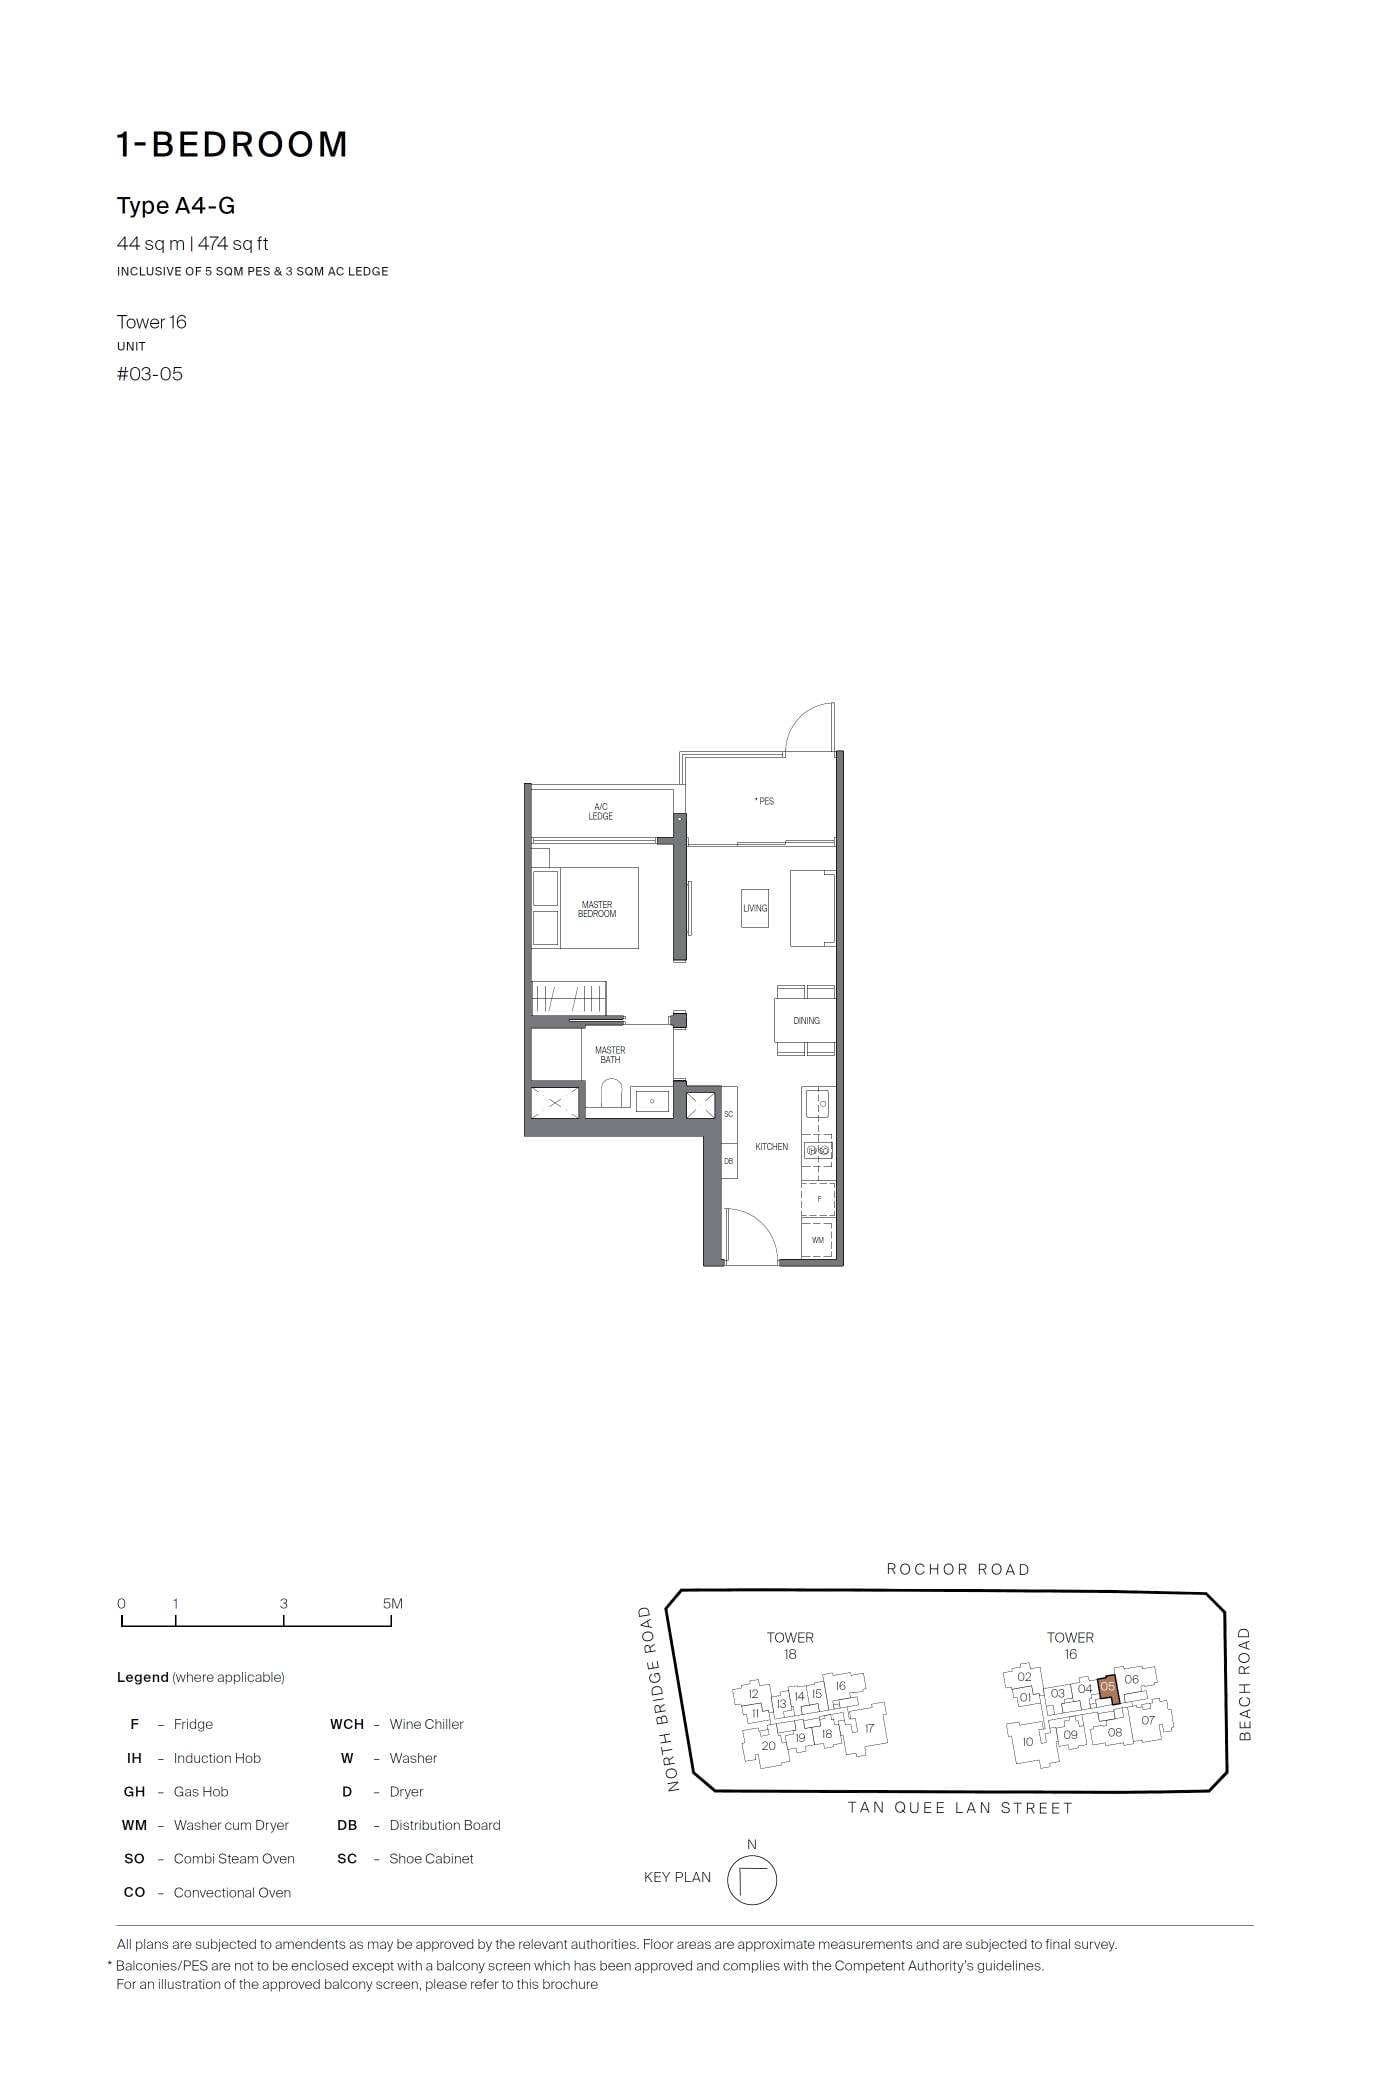 fp-midtown-modern-a4g-floor-plan.jpg